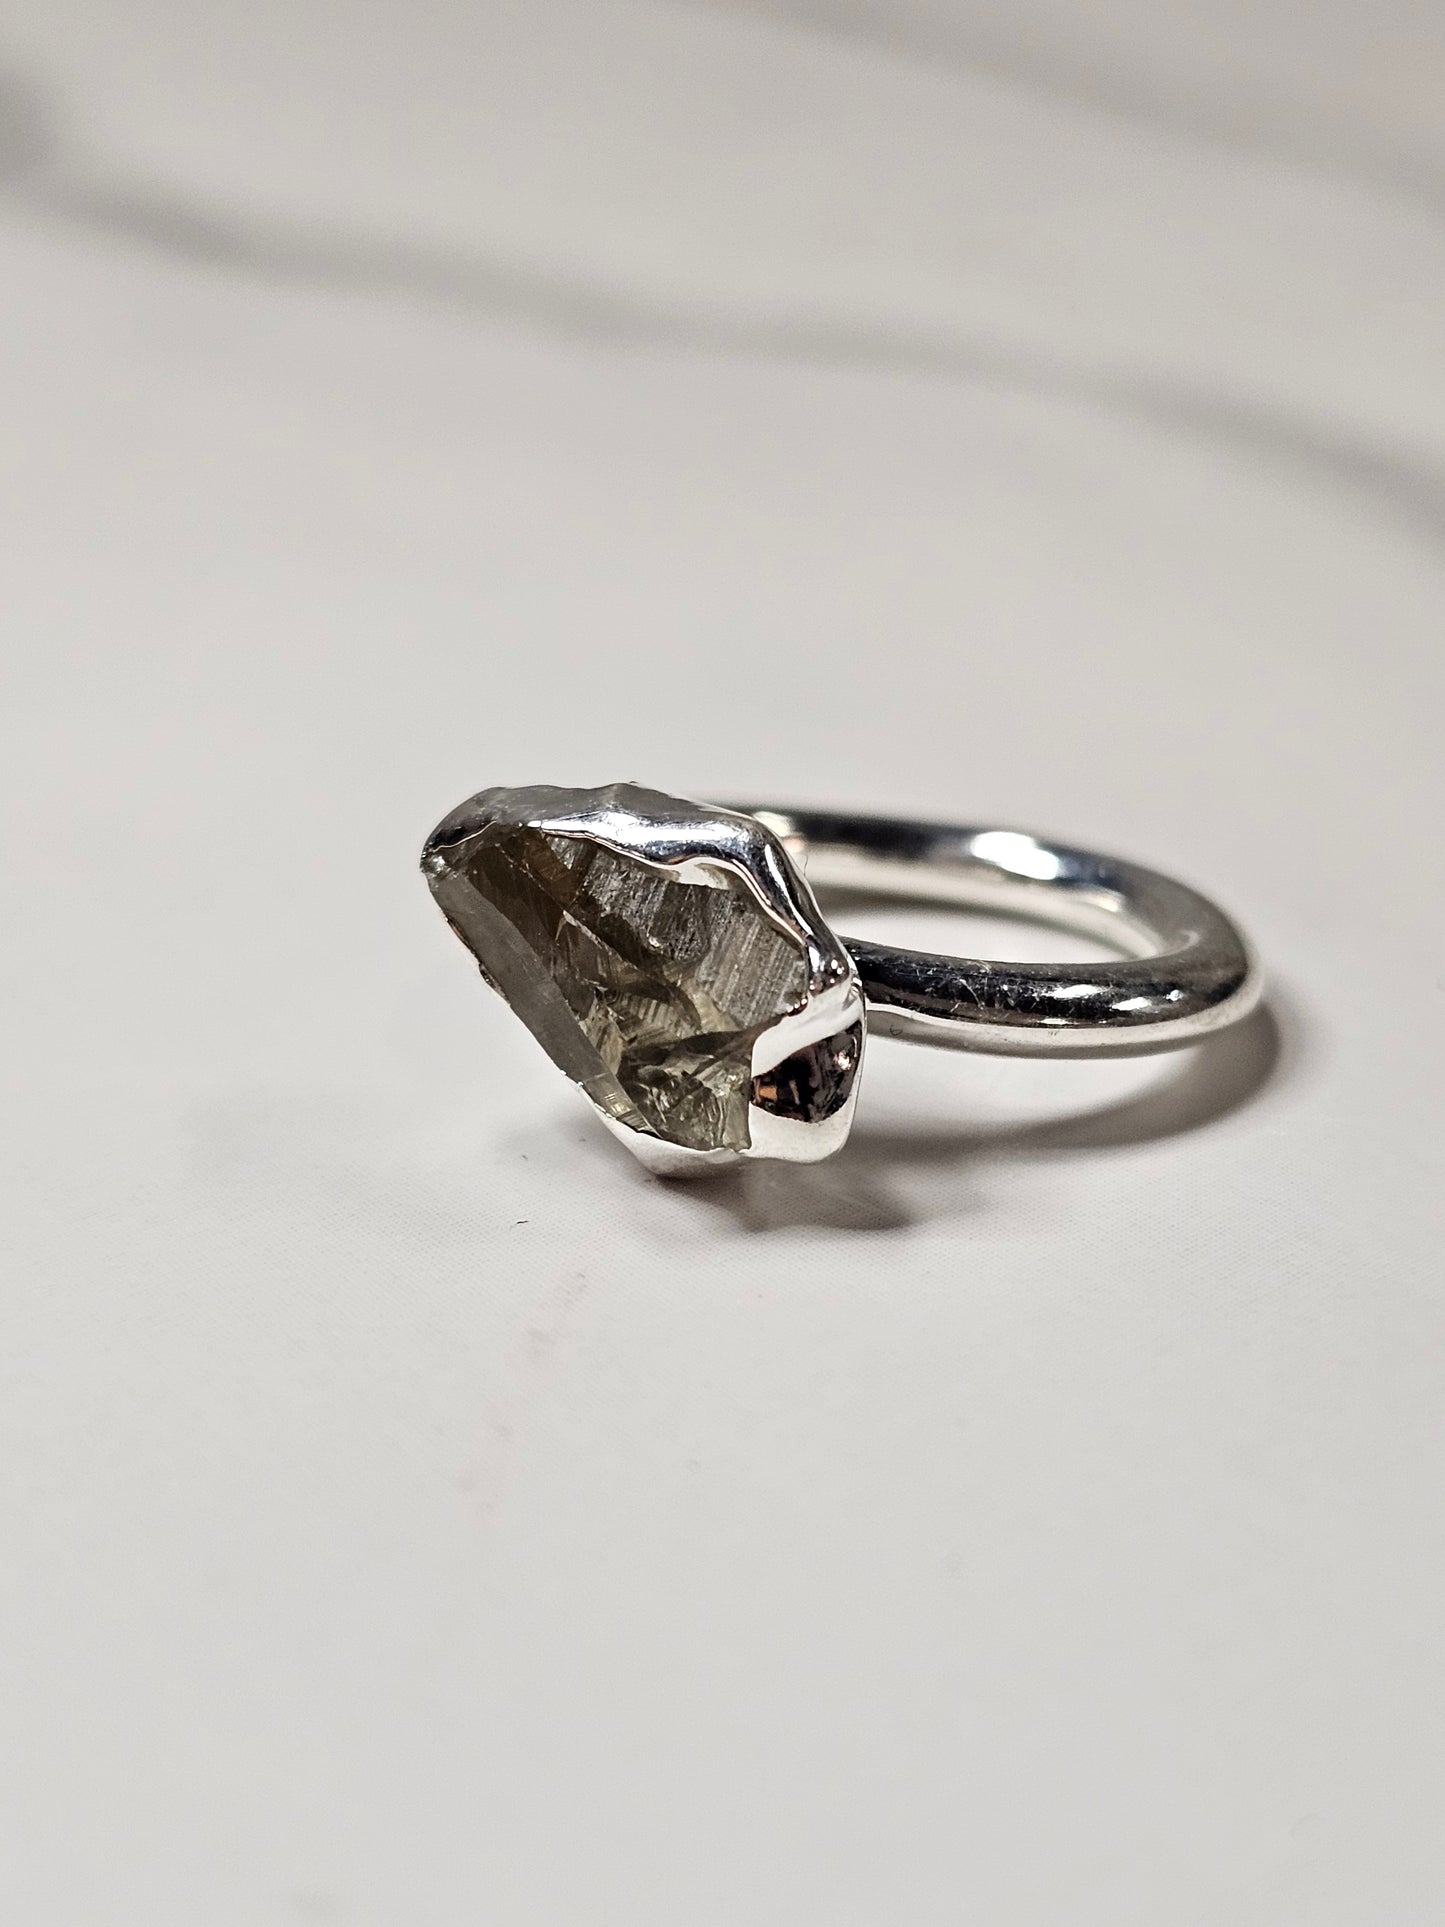 Rough Smokey Quartz Silver Plated Ring Size 4